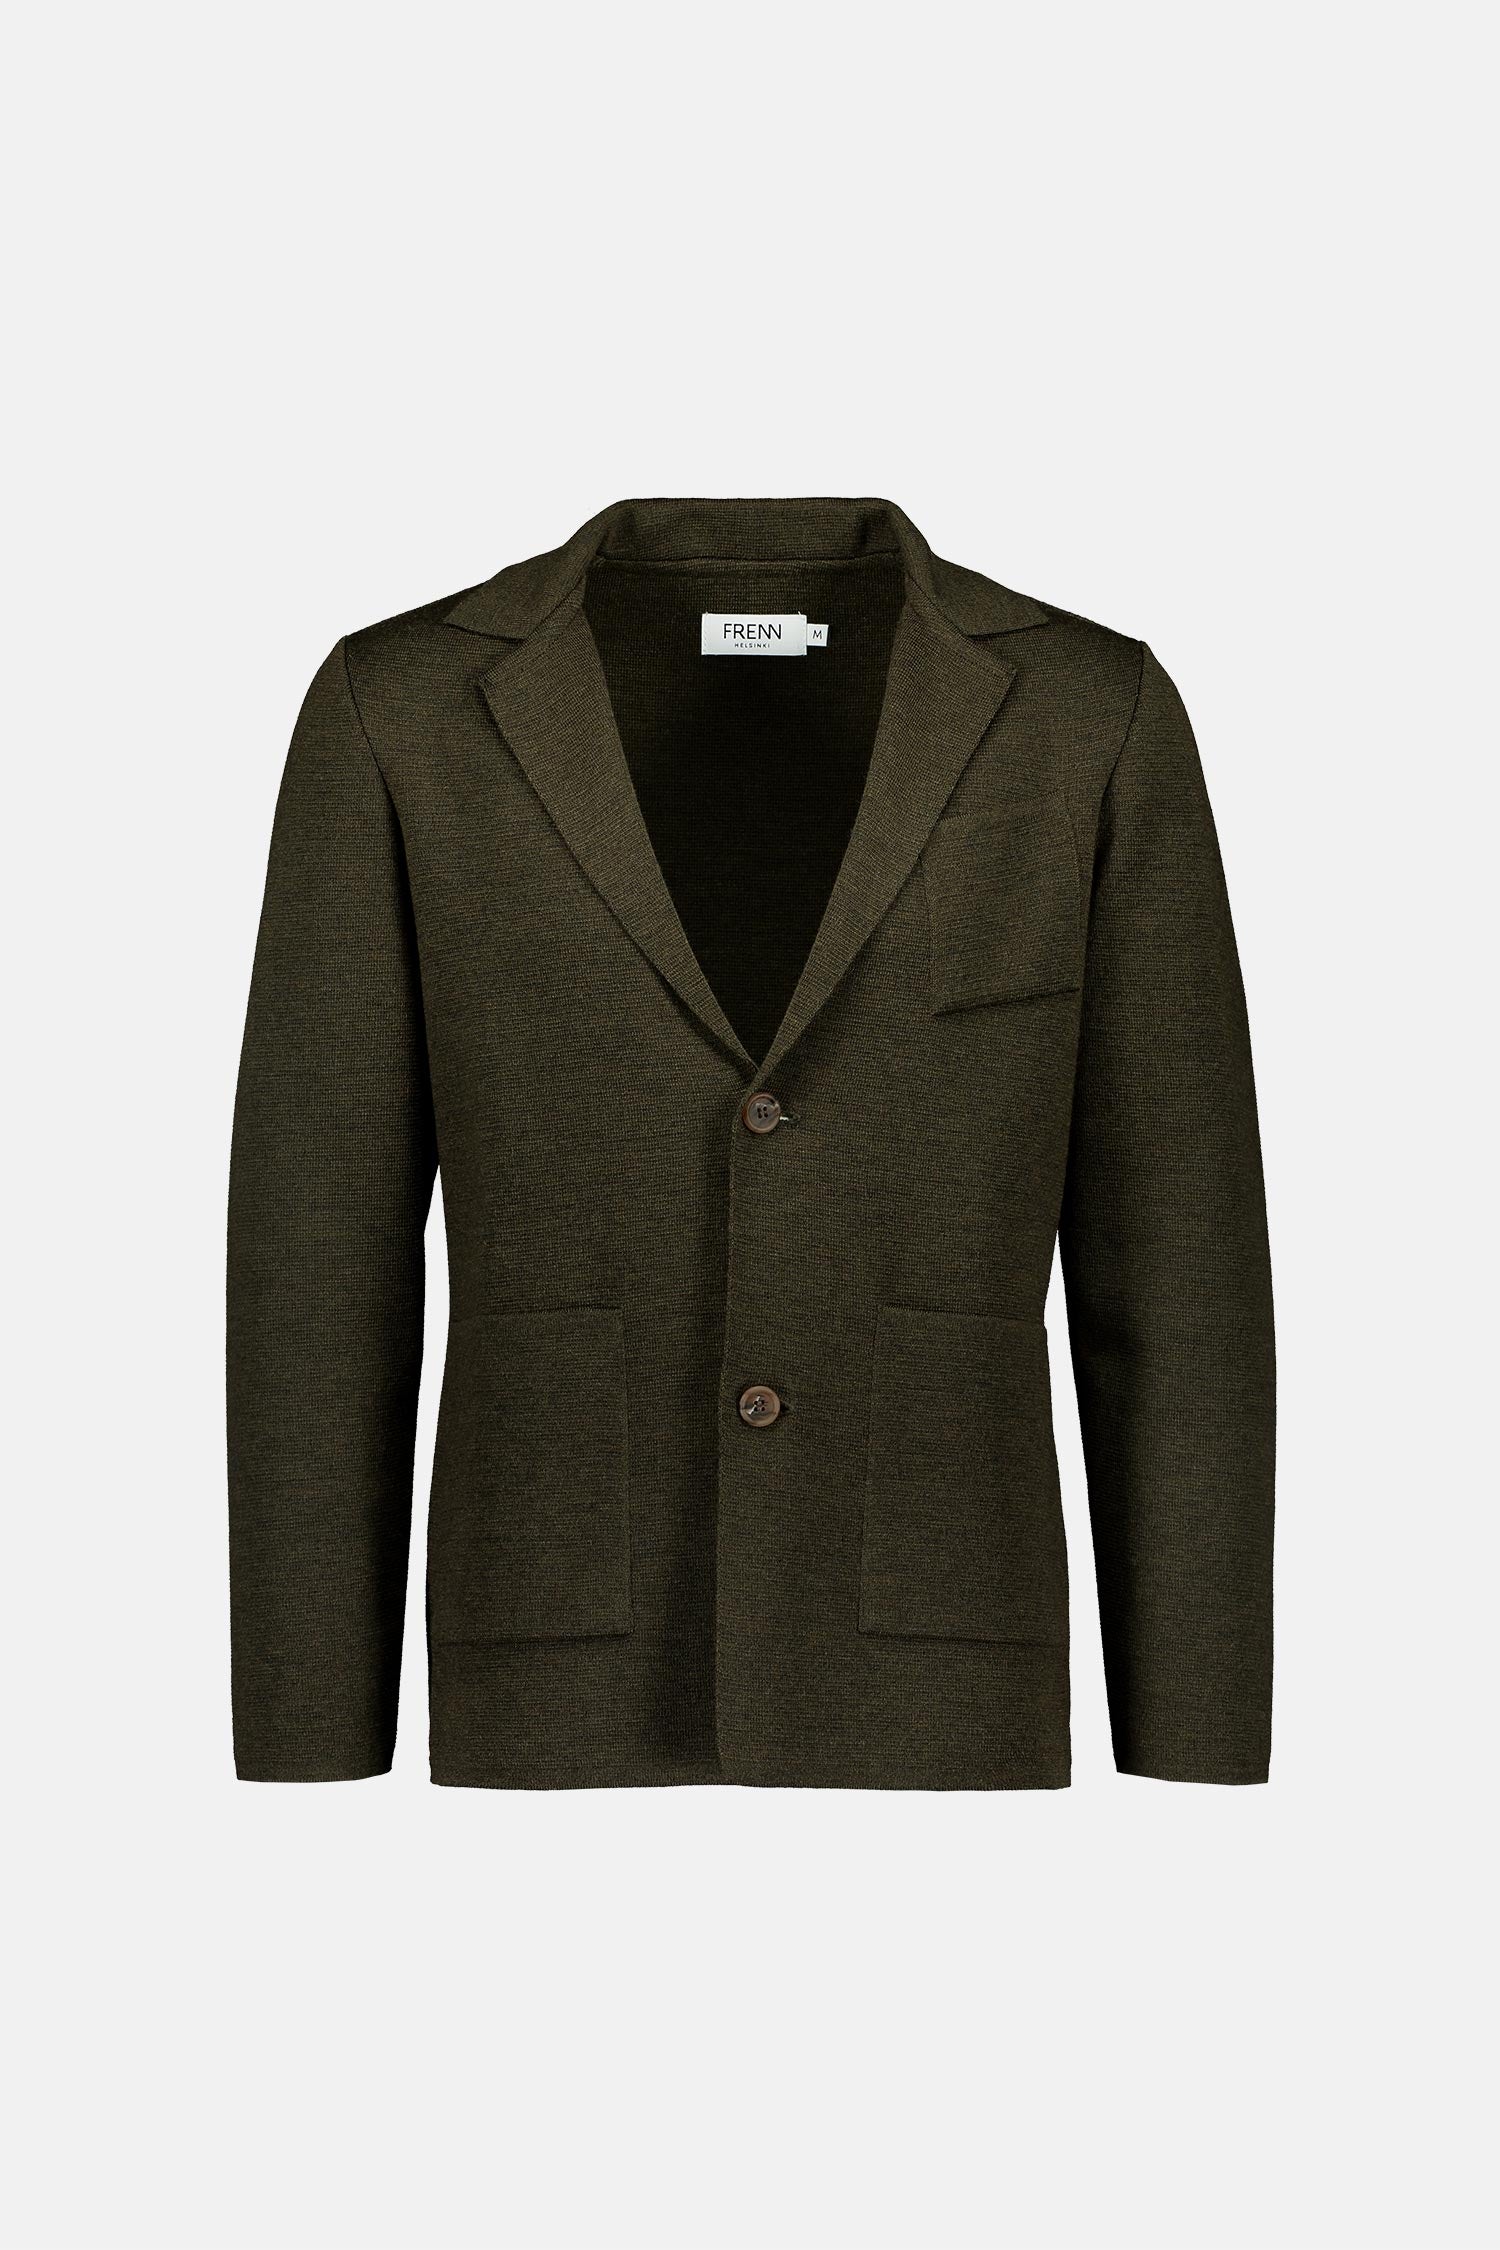 Frenn Elias sustainable premium quality extra fine merino wool cardigan jacket green